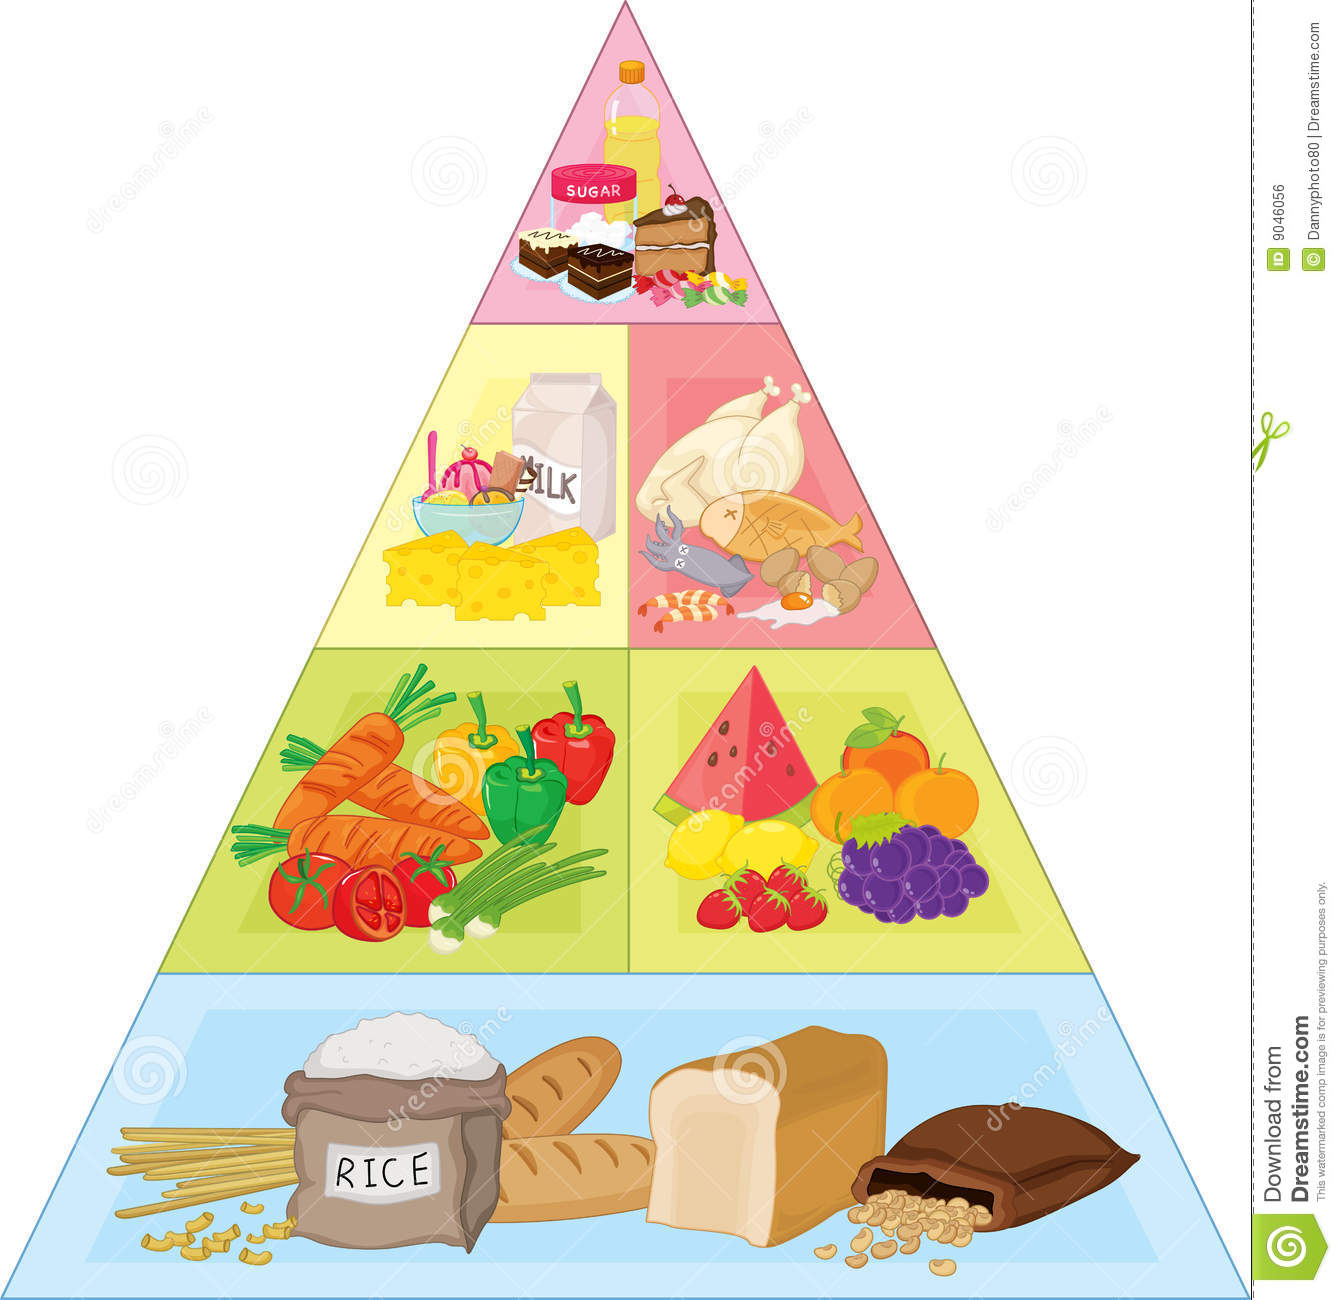 66 food pyramid.